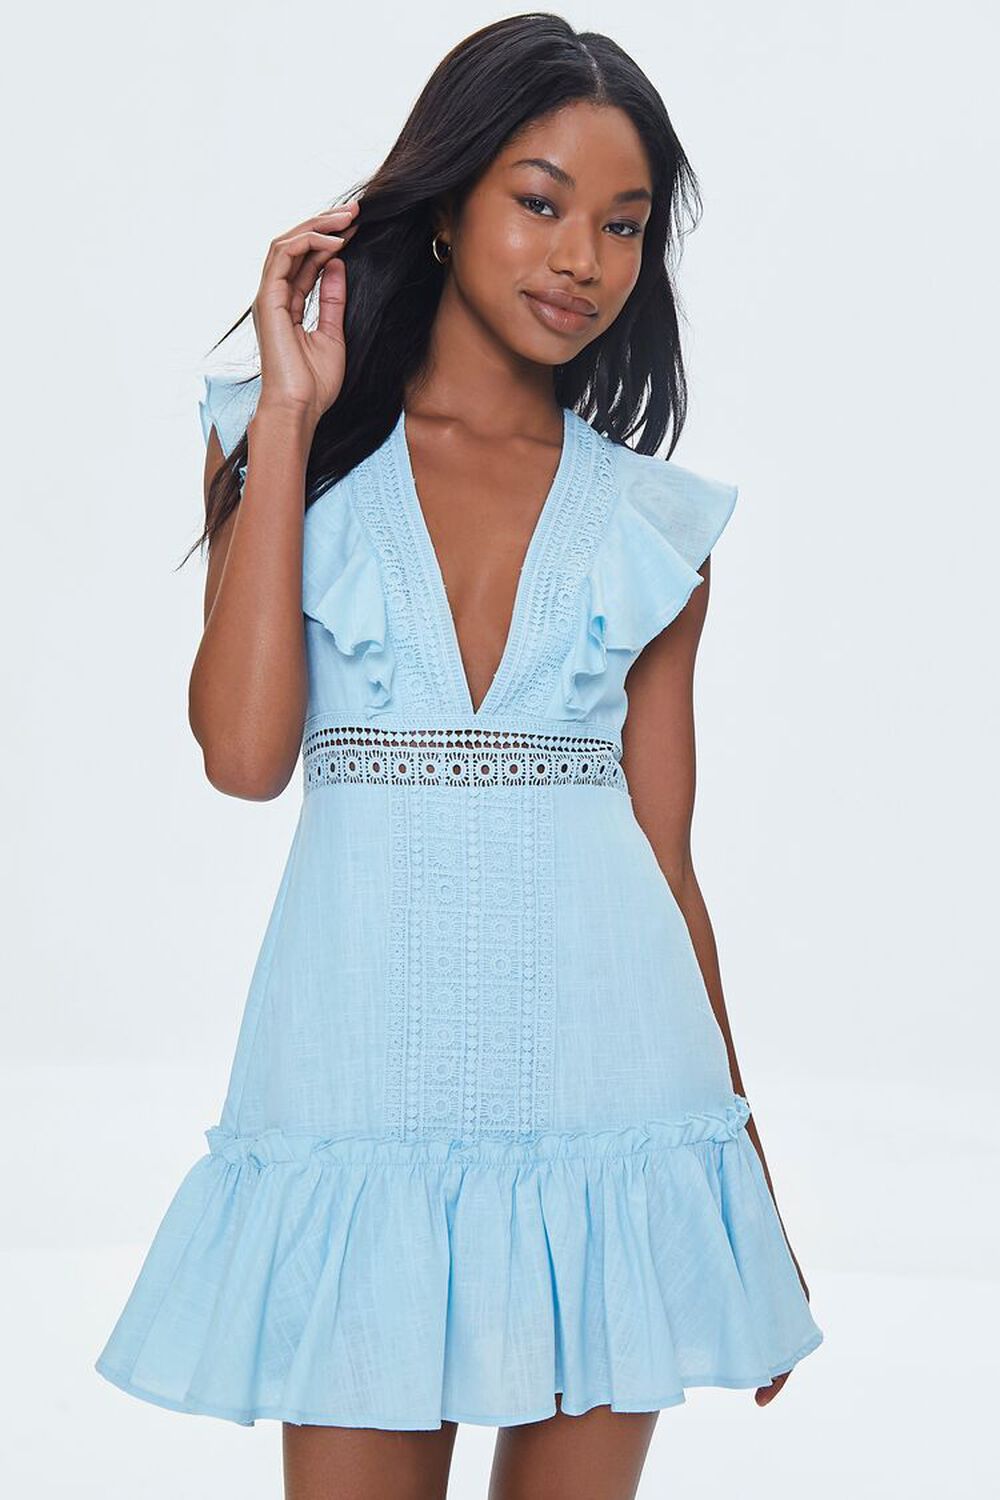 POWDER BLUE Ruffled Lace-Trim Cap-Sleeve Dress, image 1